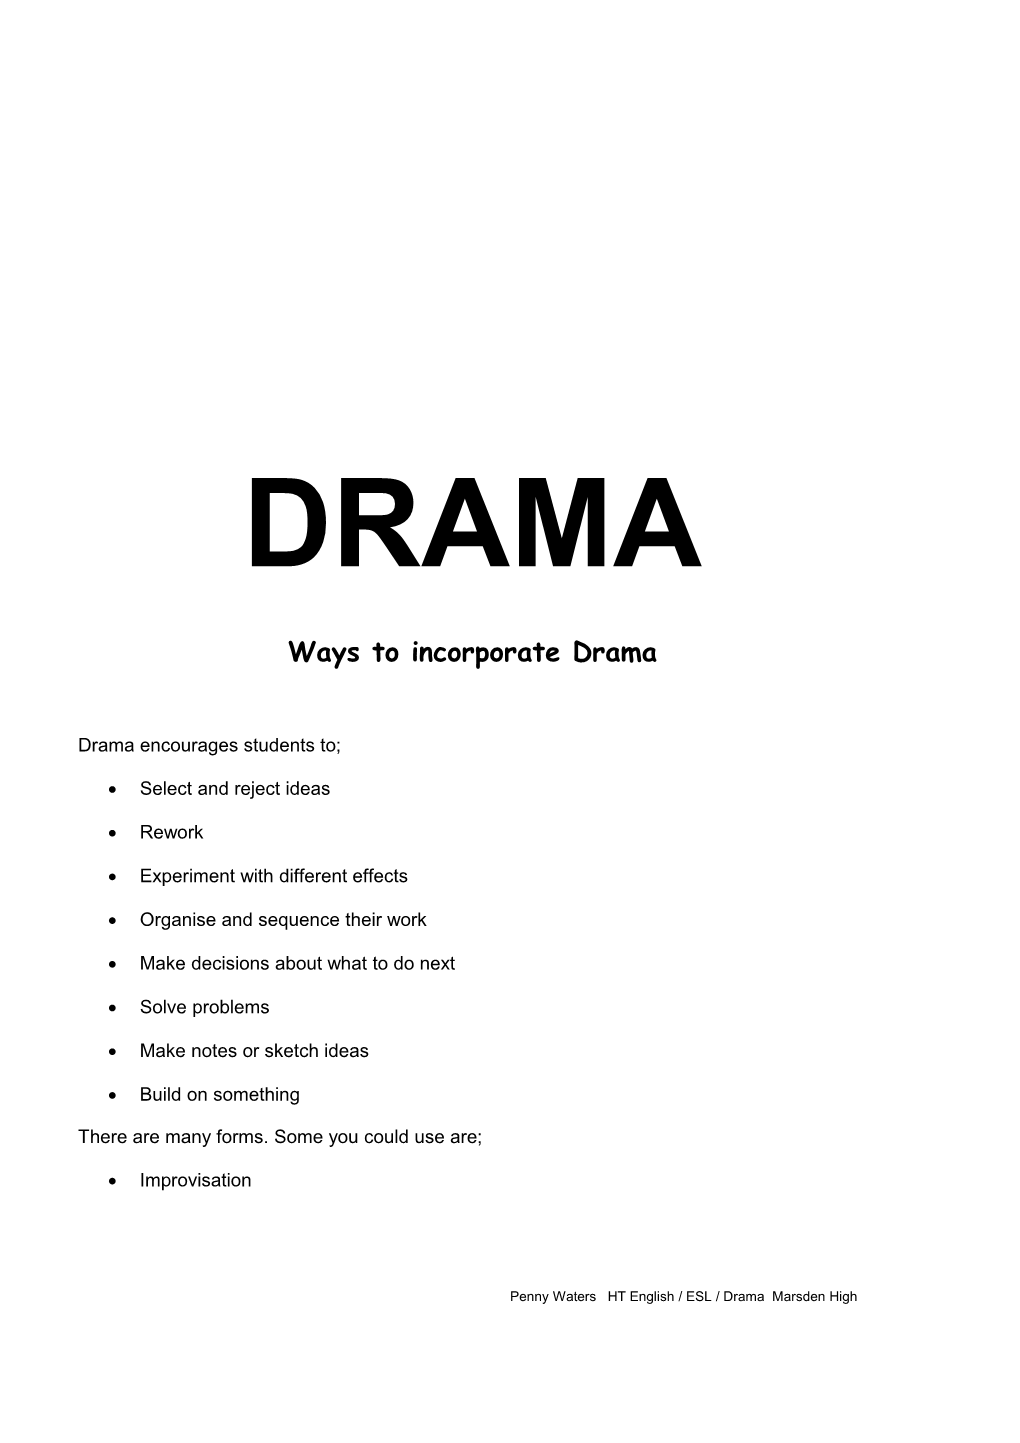 Ways to Incorporate Drama